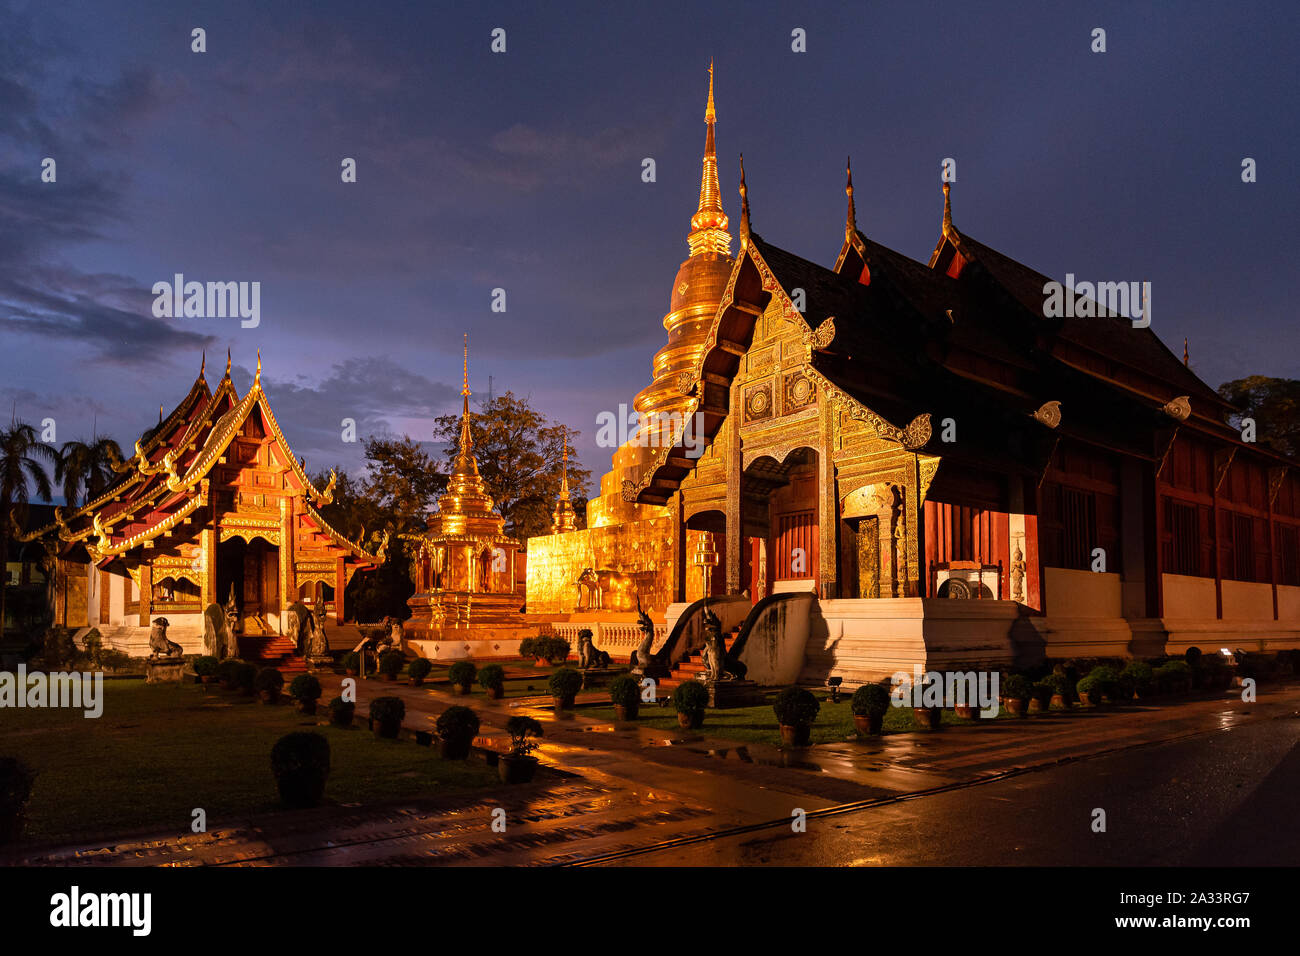 Phra Singha Tempel Goldene Pagode Beleuchtung nach Regen in der Abenddämmerung. Stockfoto